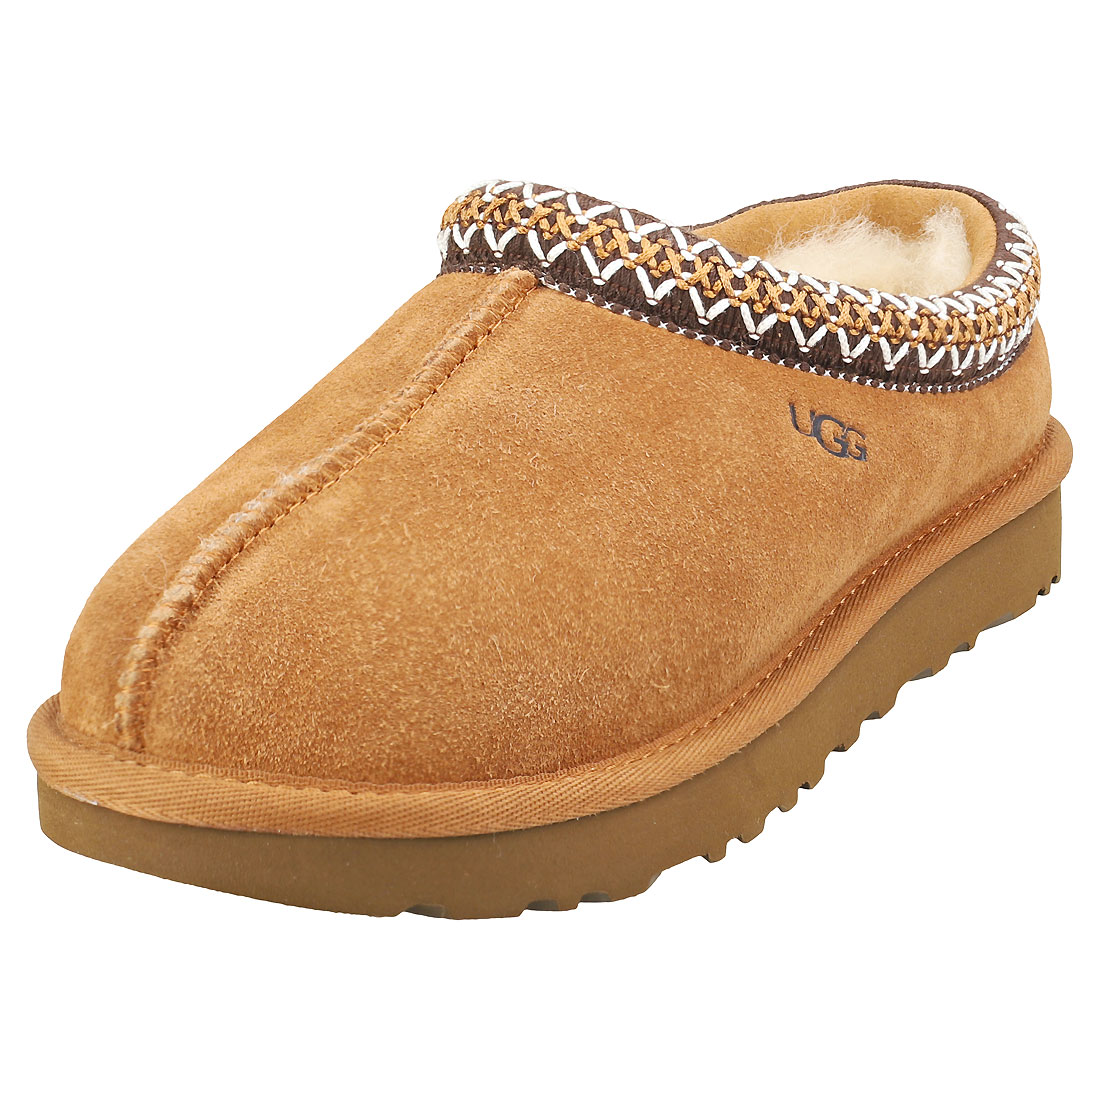 UGG Tasman Womens Chestnut Slippers Shoes - 3 UK | eBay